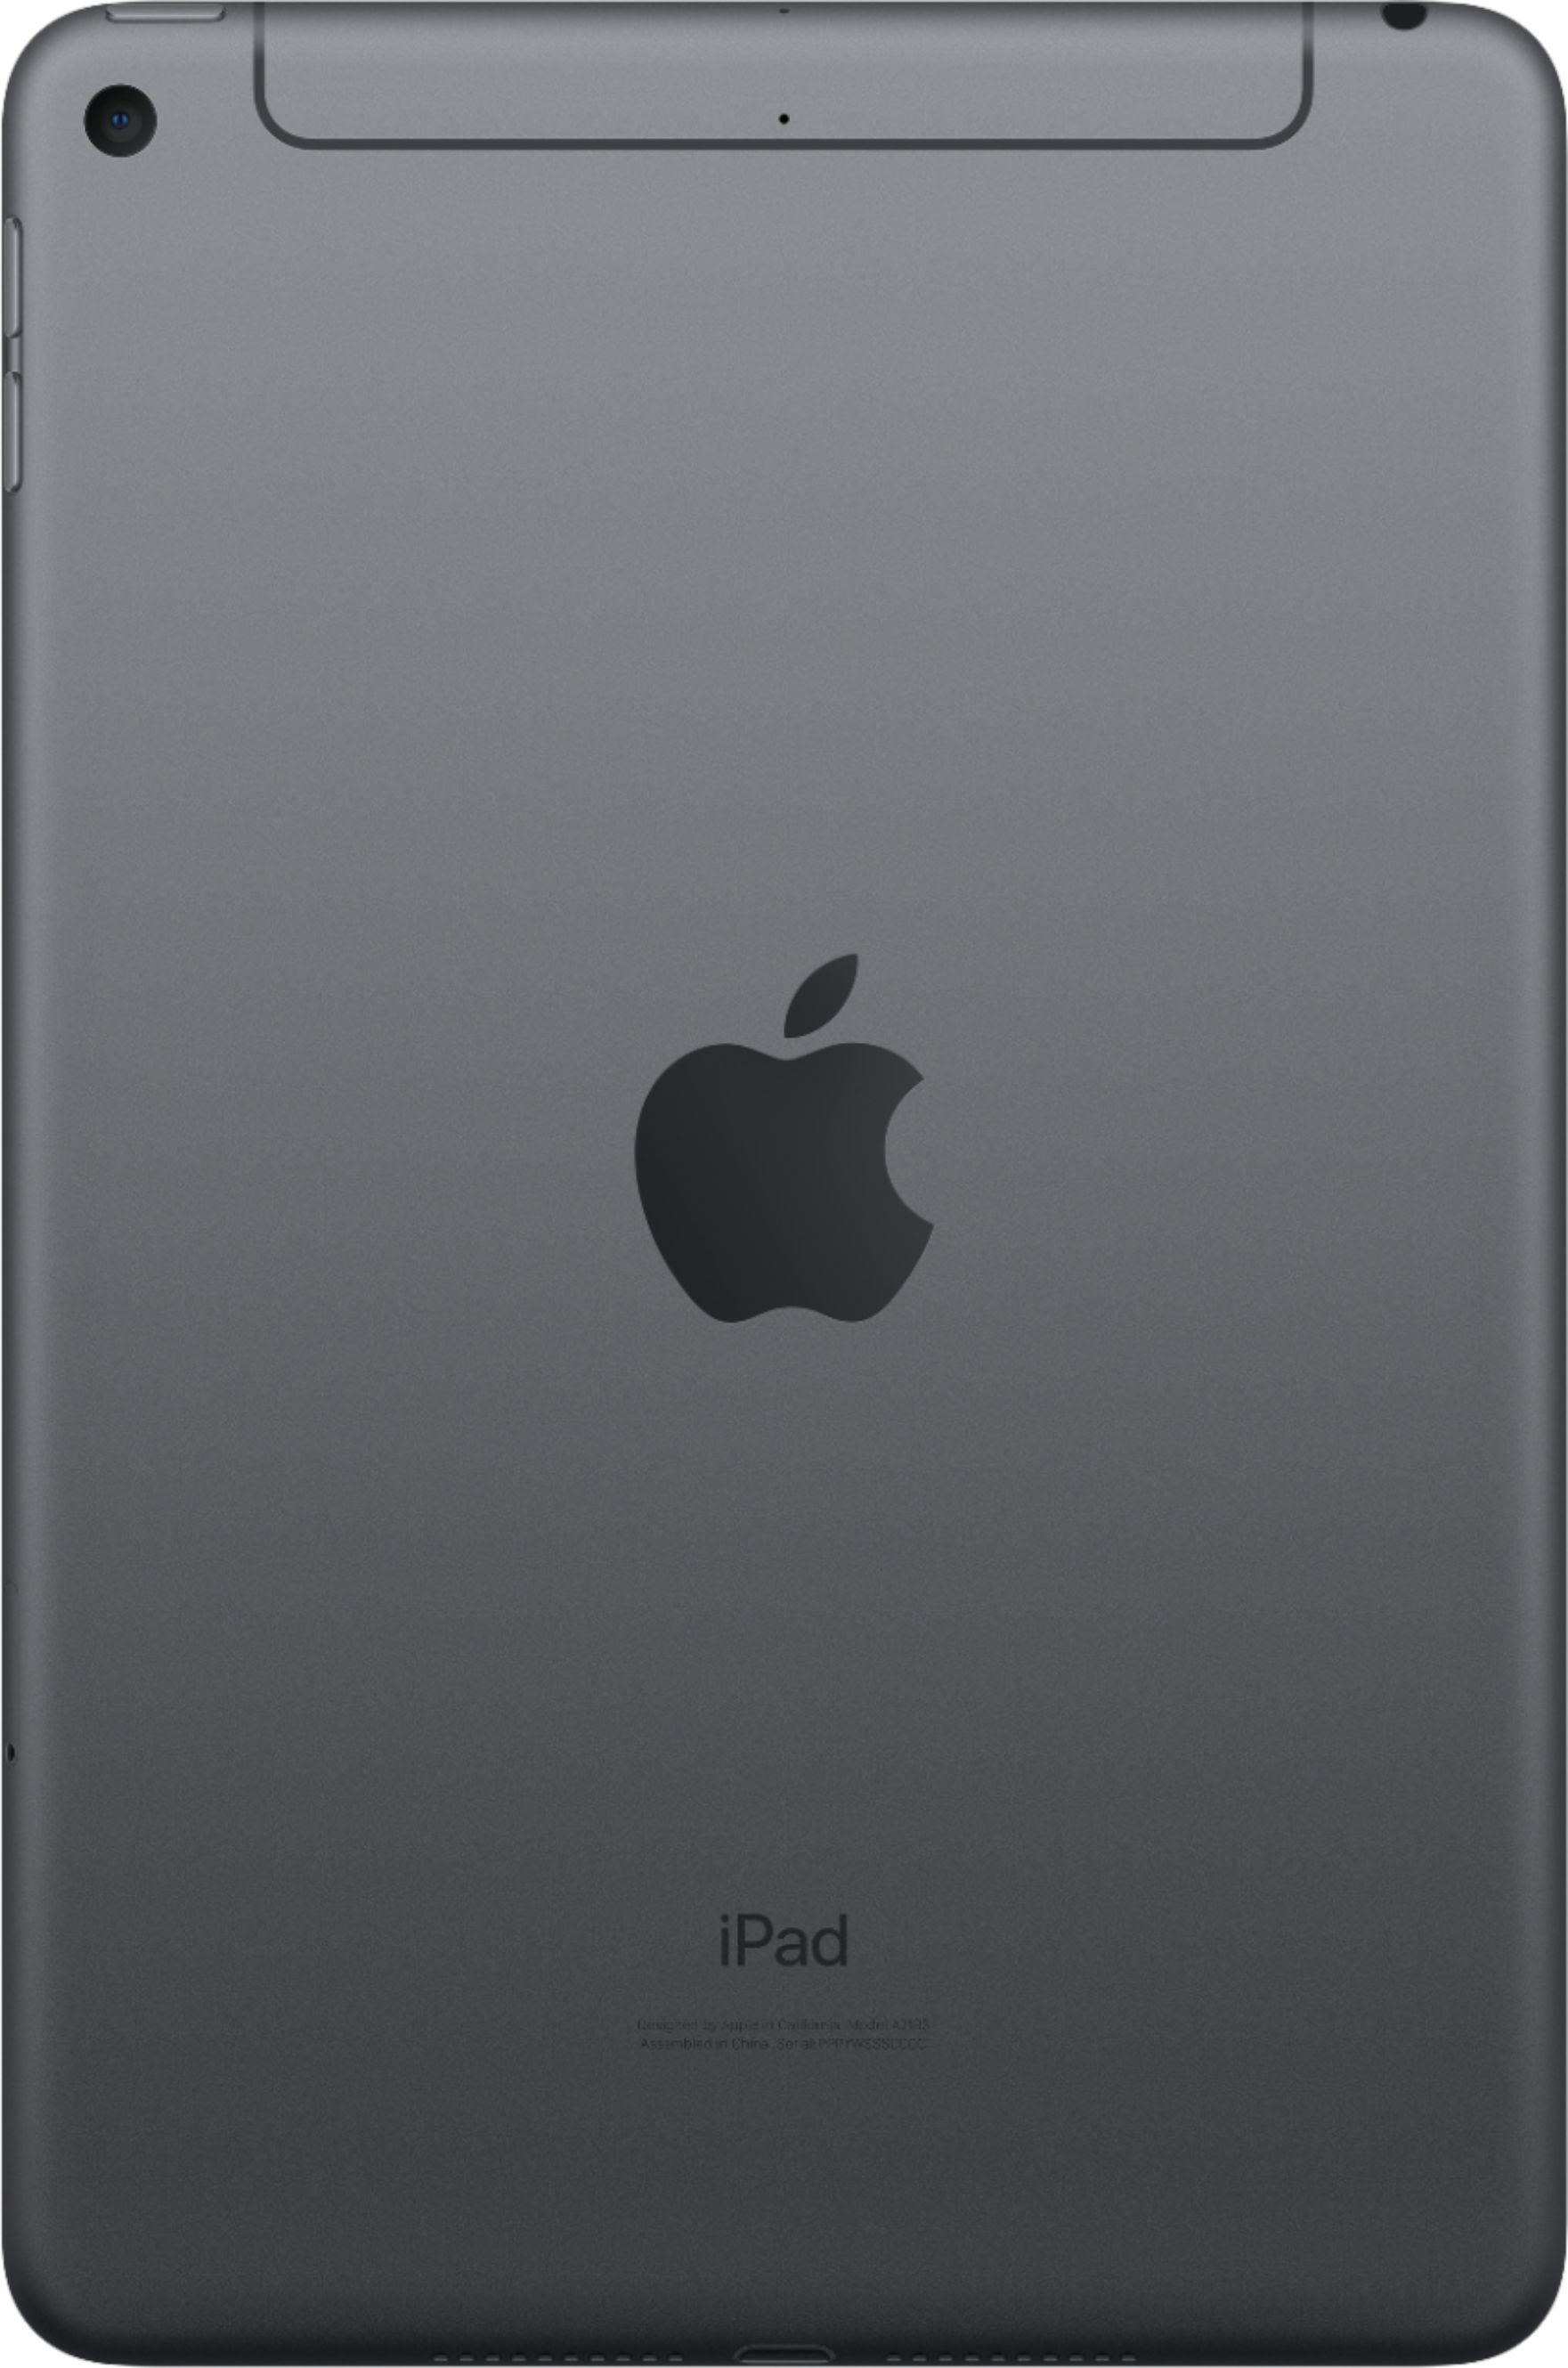 Back View: 2-Year AppleCare+ for iPad / iPad mini